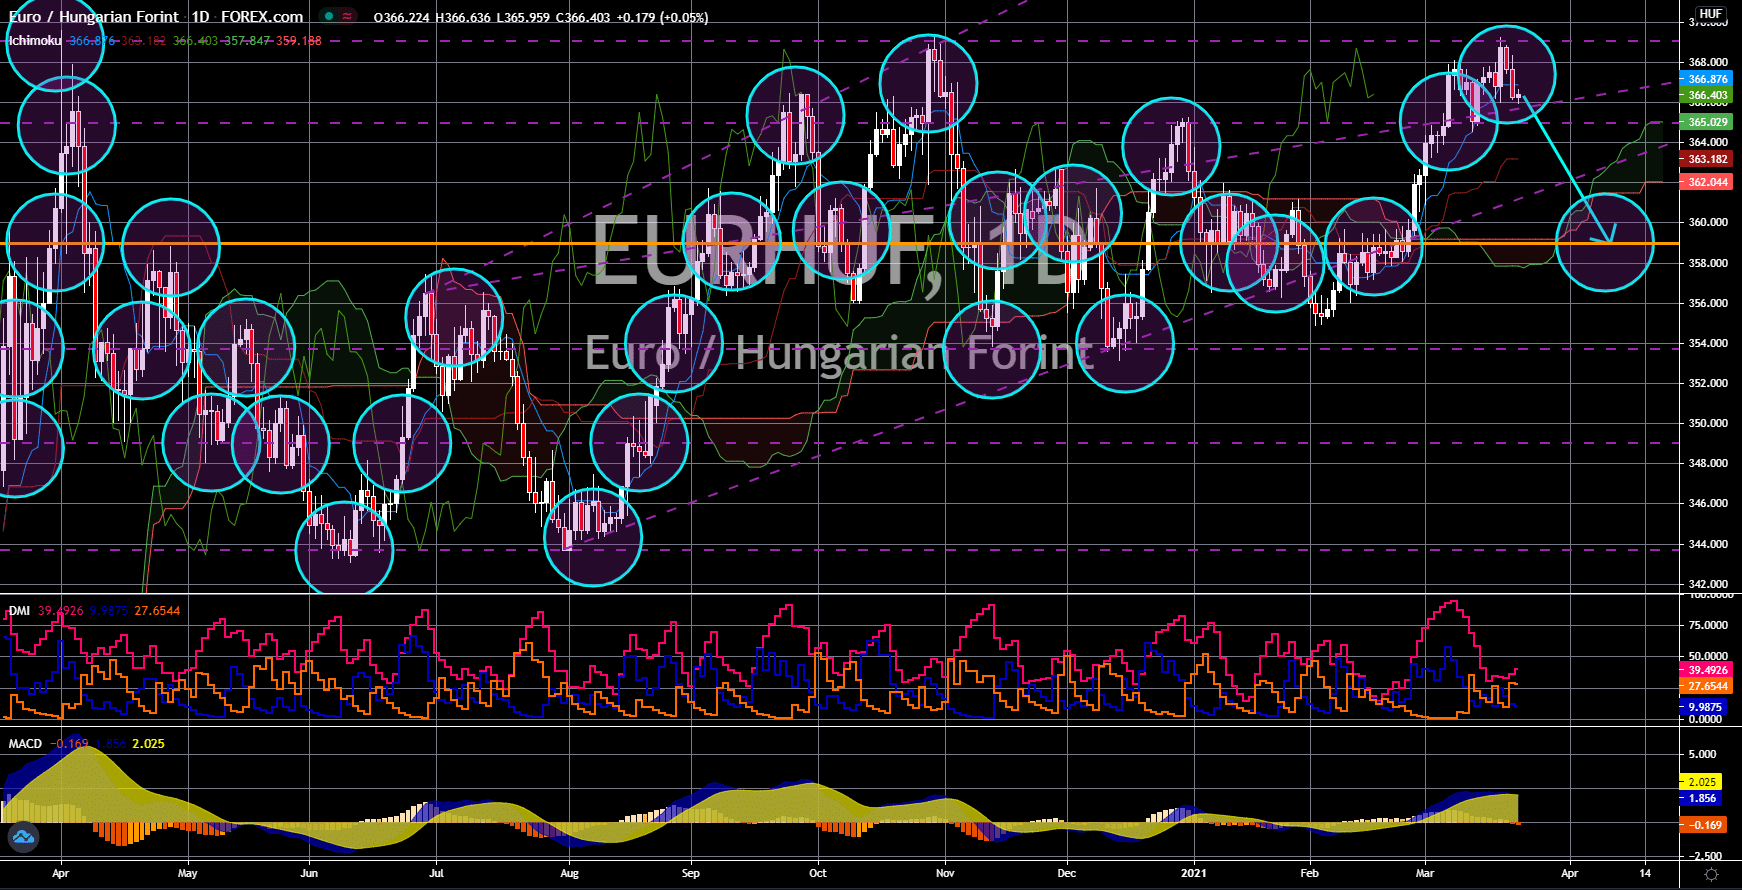 FinanceBrokerage - Market News: EUR/HUF Chart